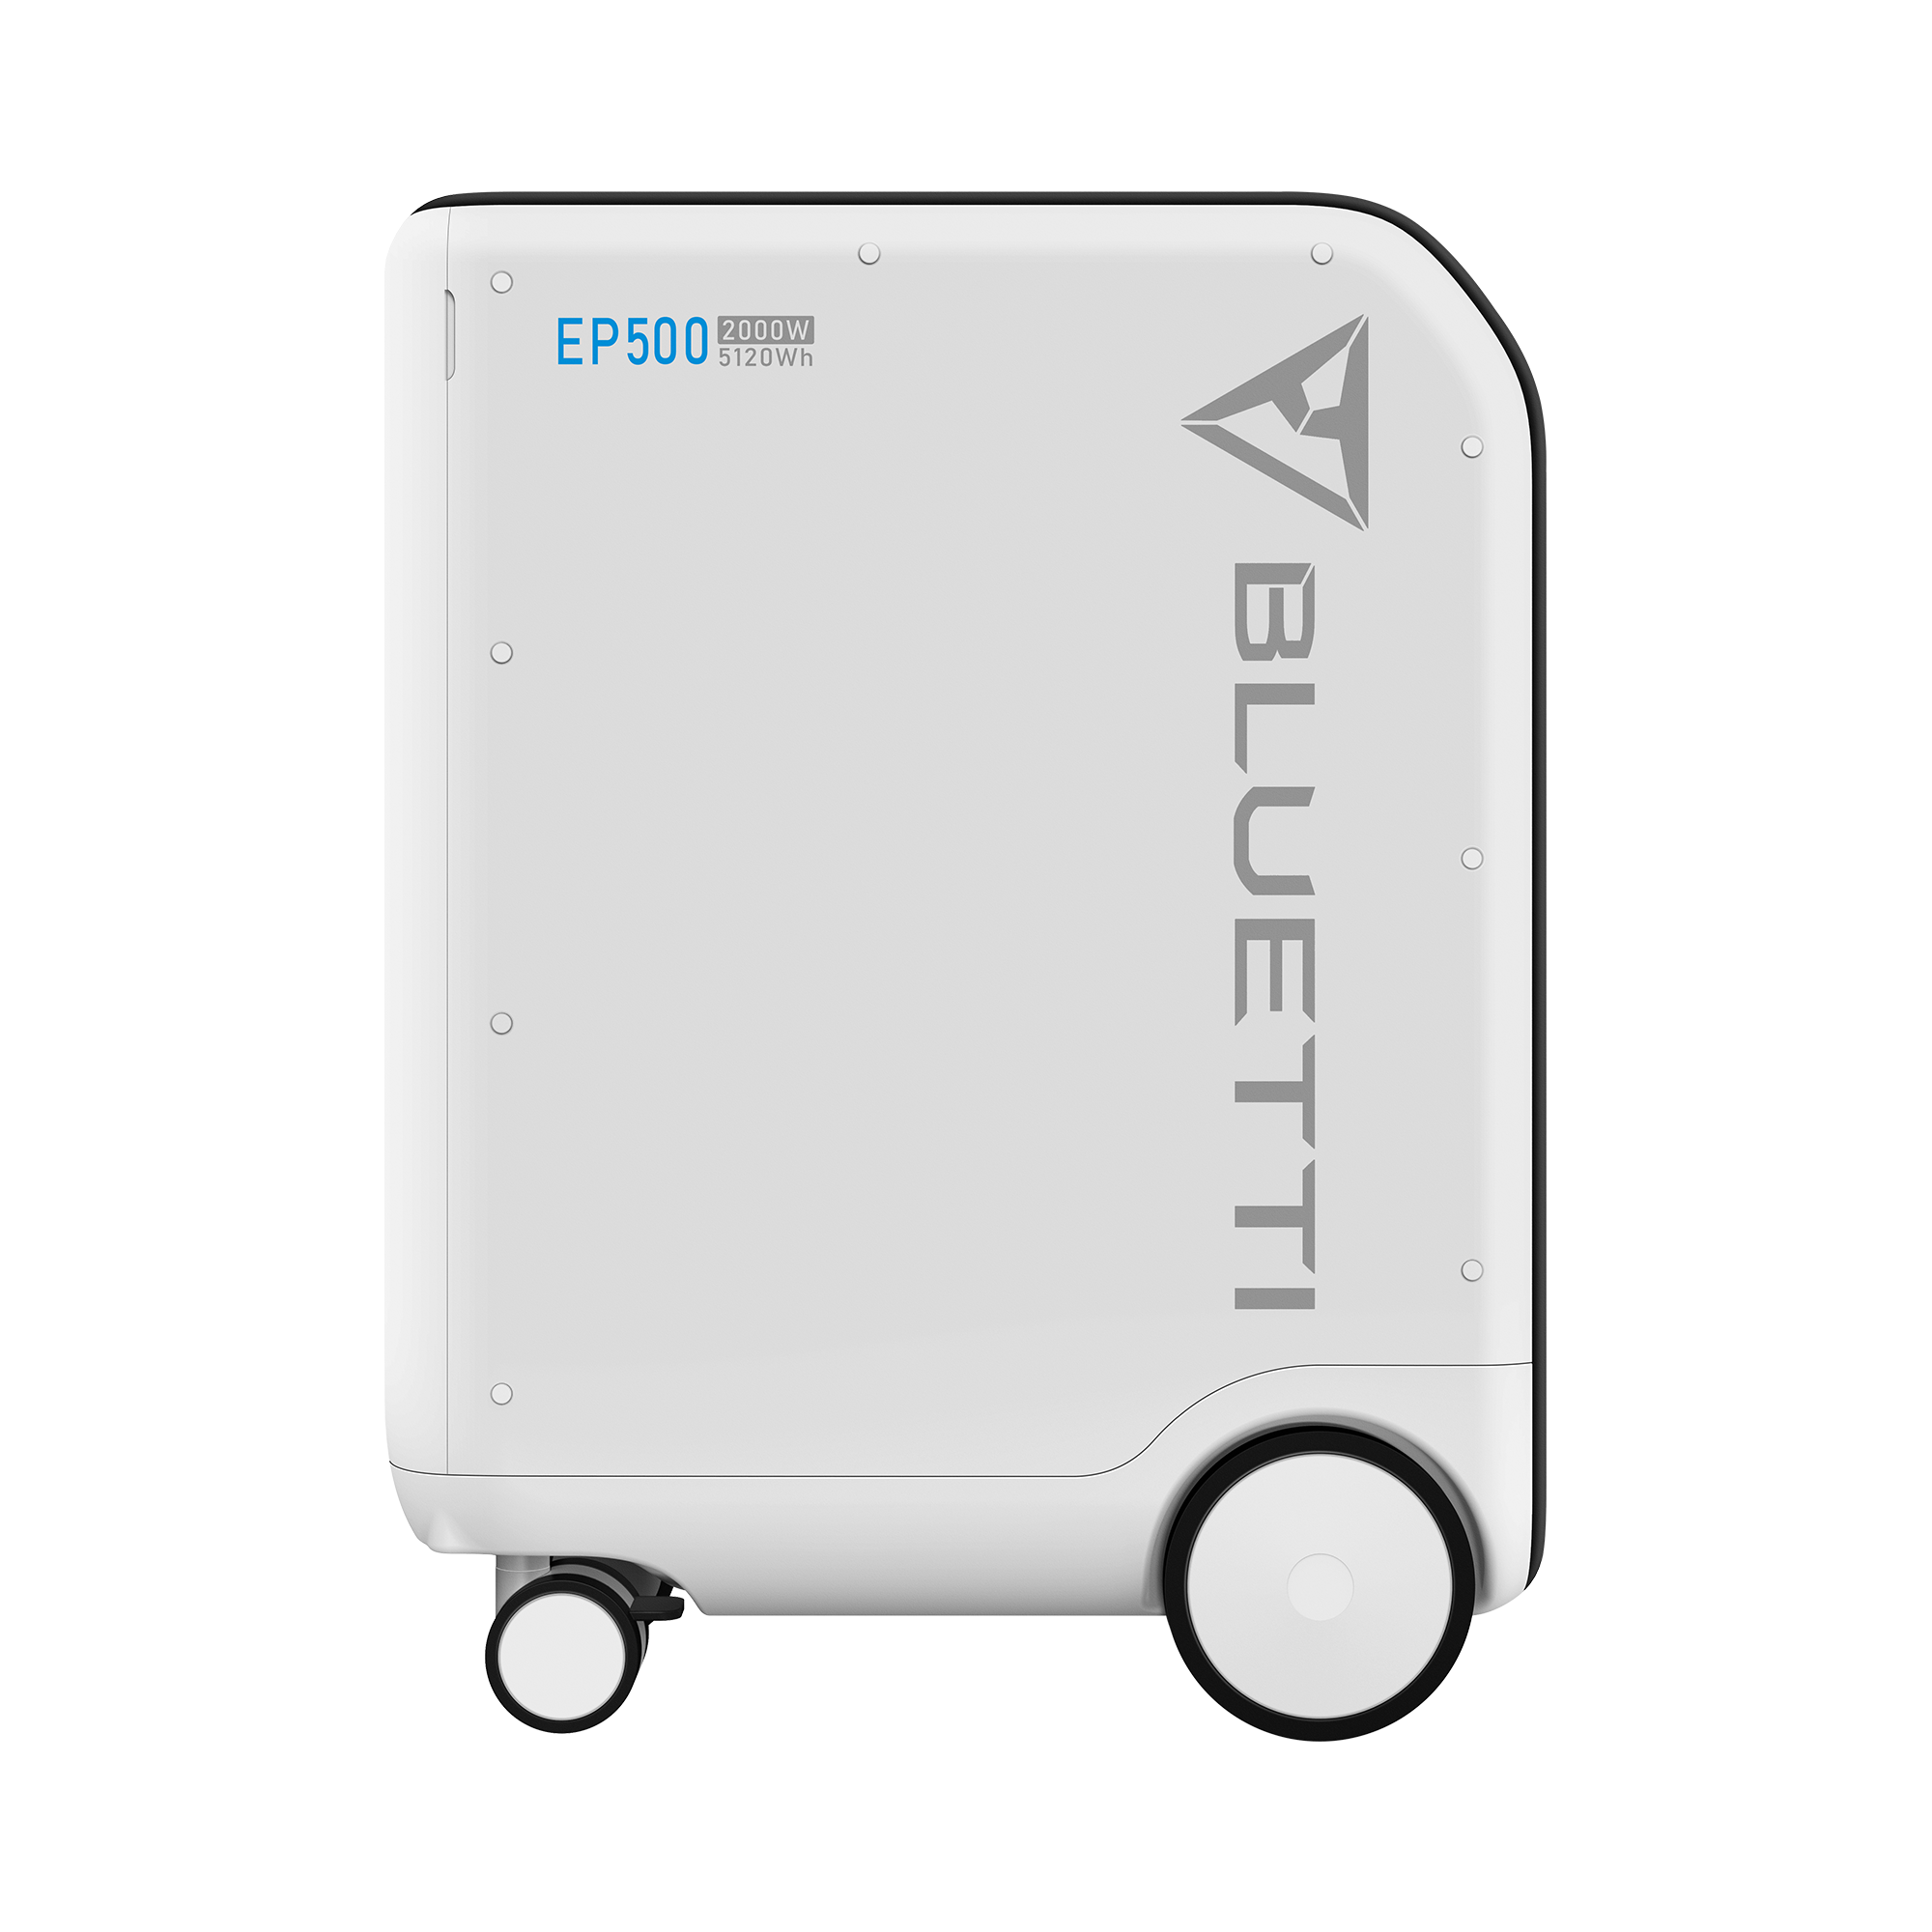 BLUETTI 家庭用バックアップ電源 EP500 大容量|可搬型蓄電池 非常用電源 防災グッズ ブルーティ